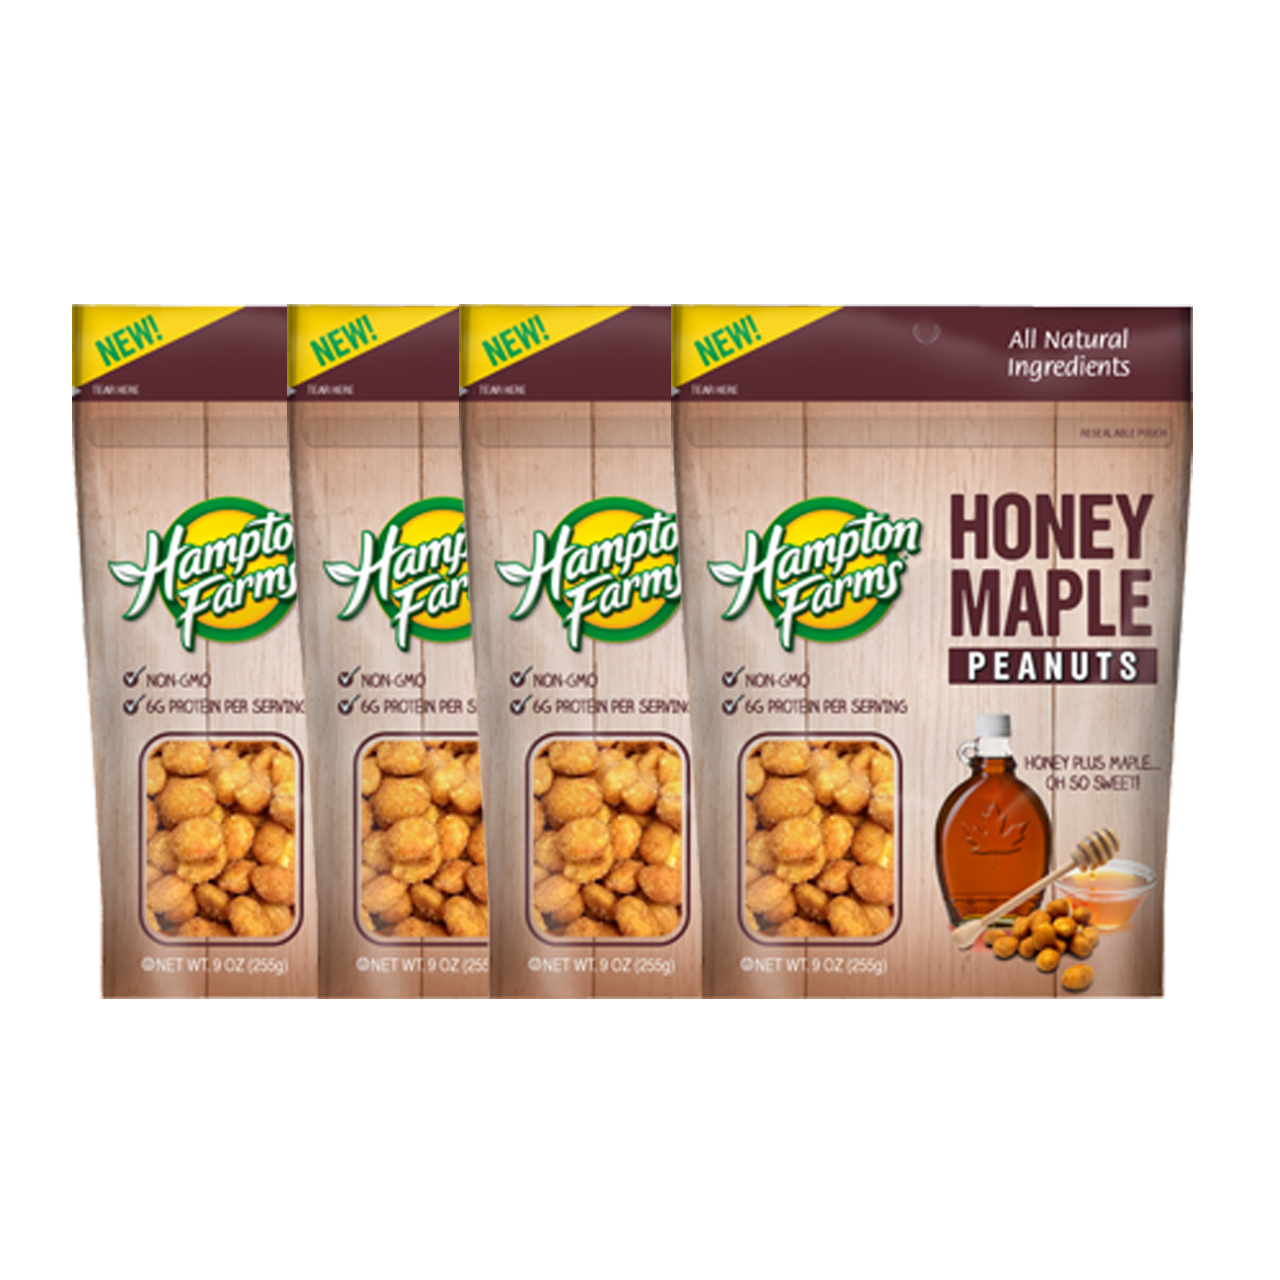 Honey Maple Peanuts (8 oz.) - 4 pack